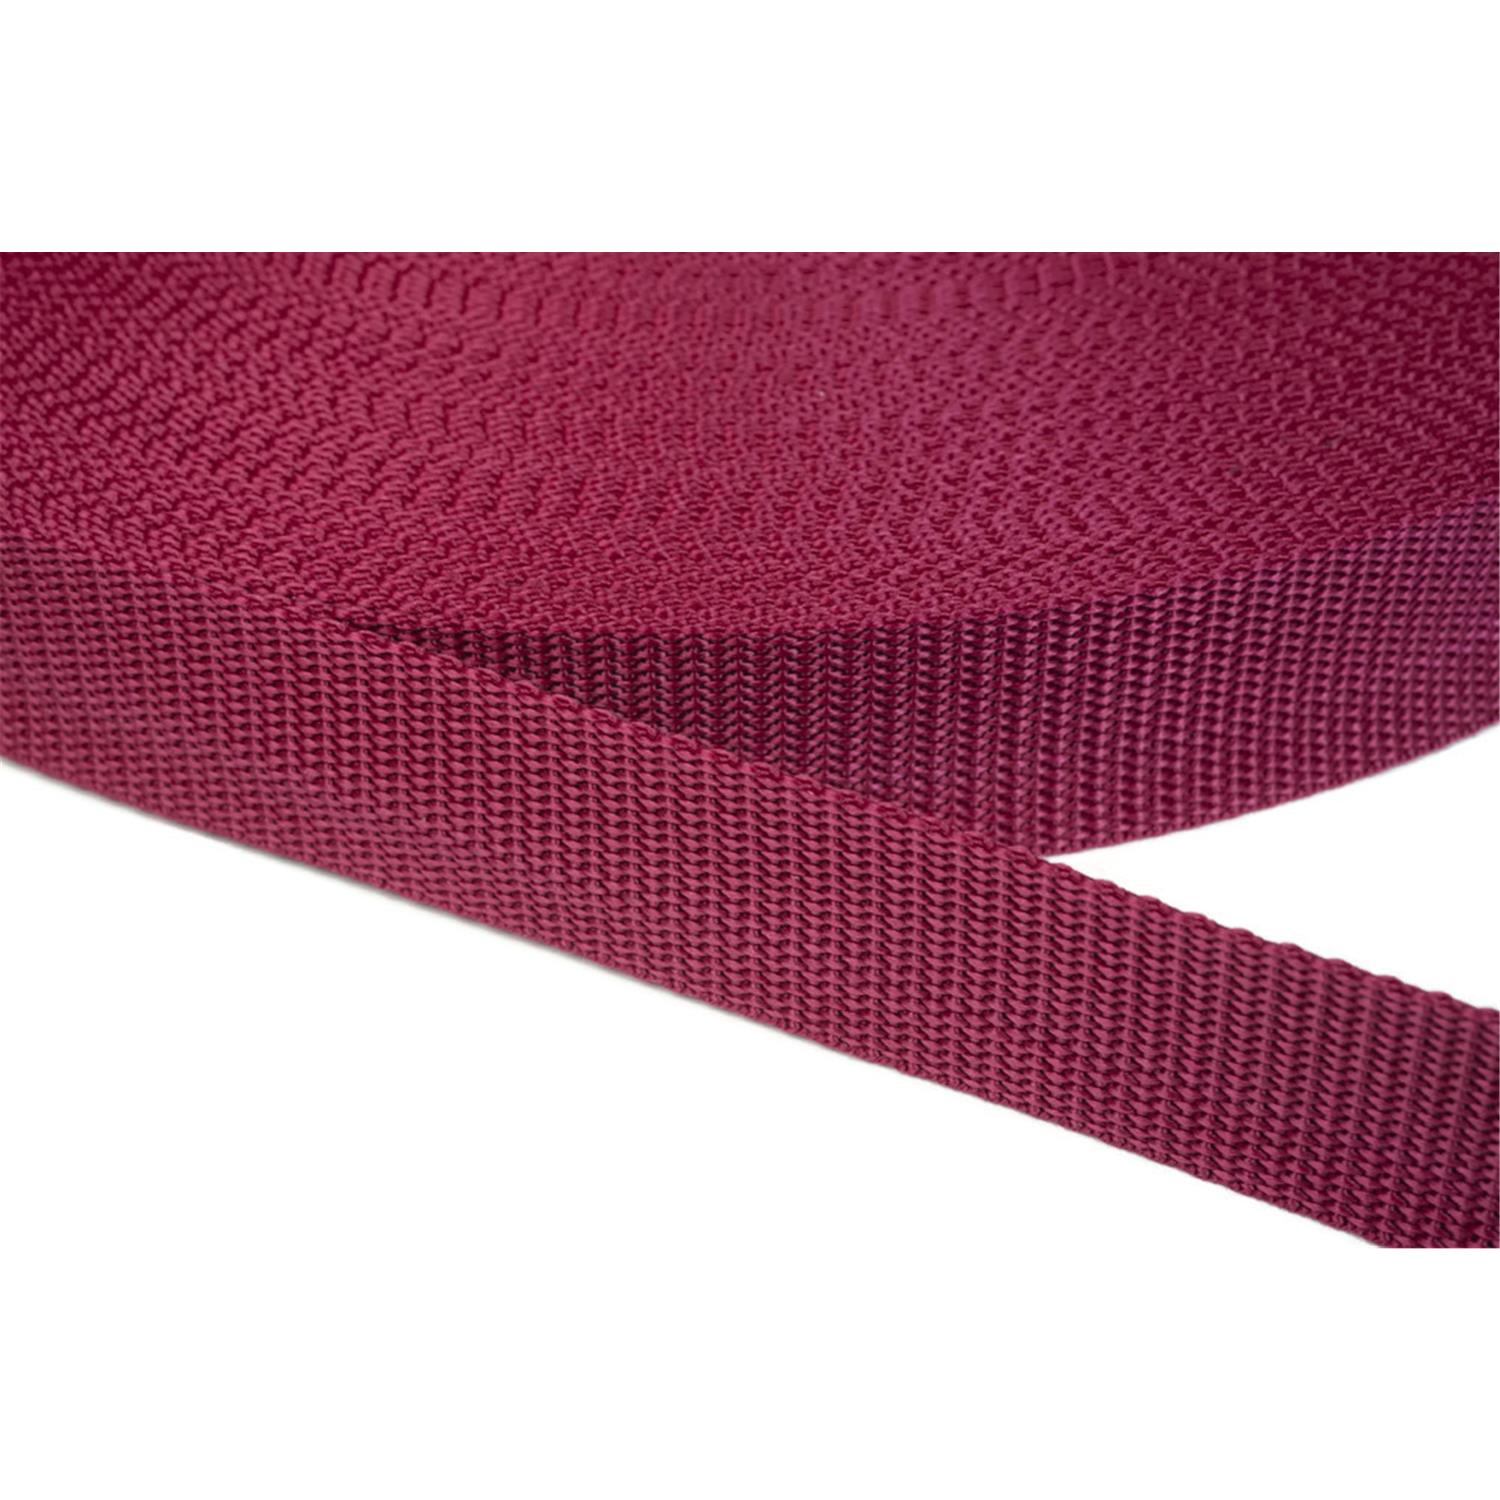 Gurtband 20mm breit aus Polypropylen in 41 Farben 21 - dunkelrot 50 Meter